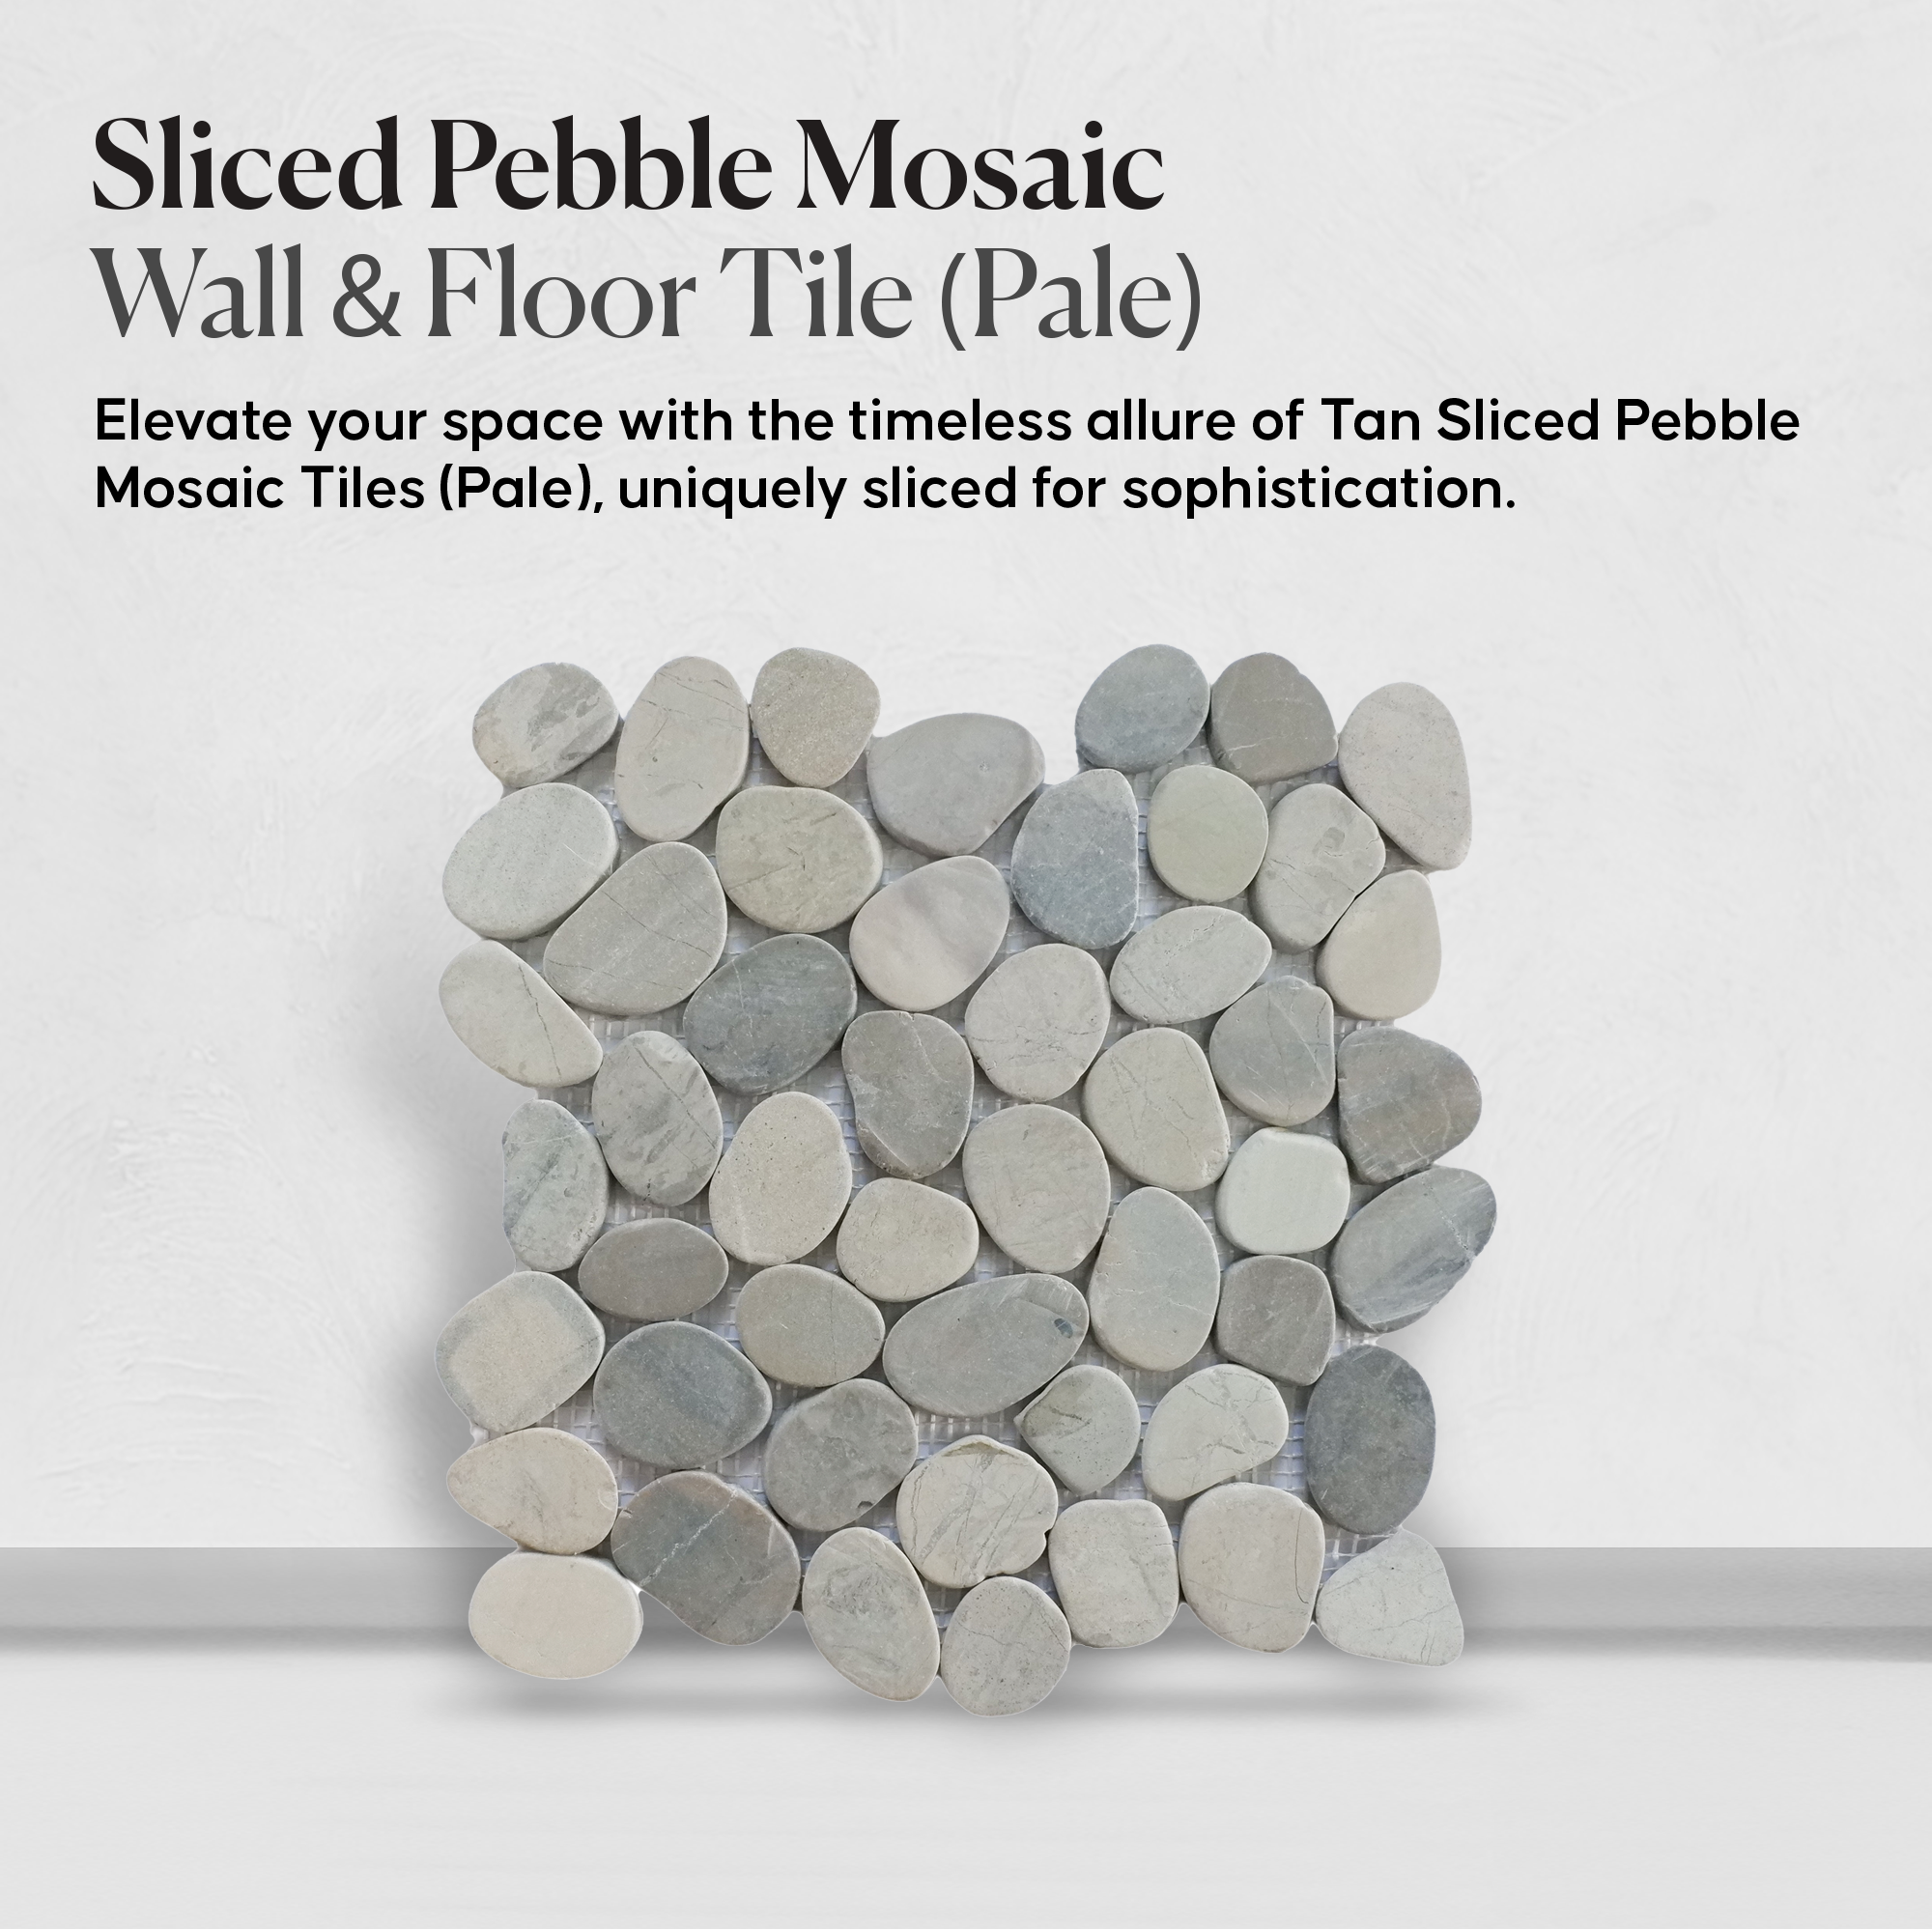 Sliced Pebble Mosaic Tiles, Stone Mosaic Wall & Floor Tile